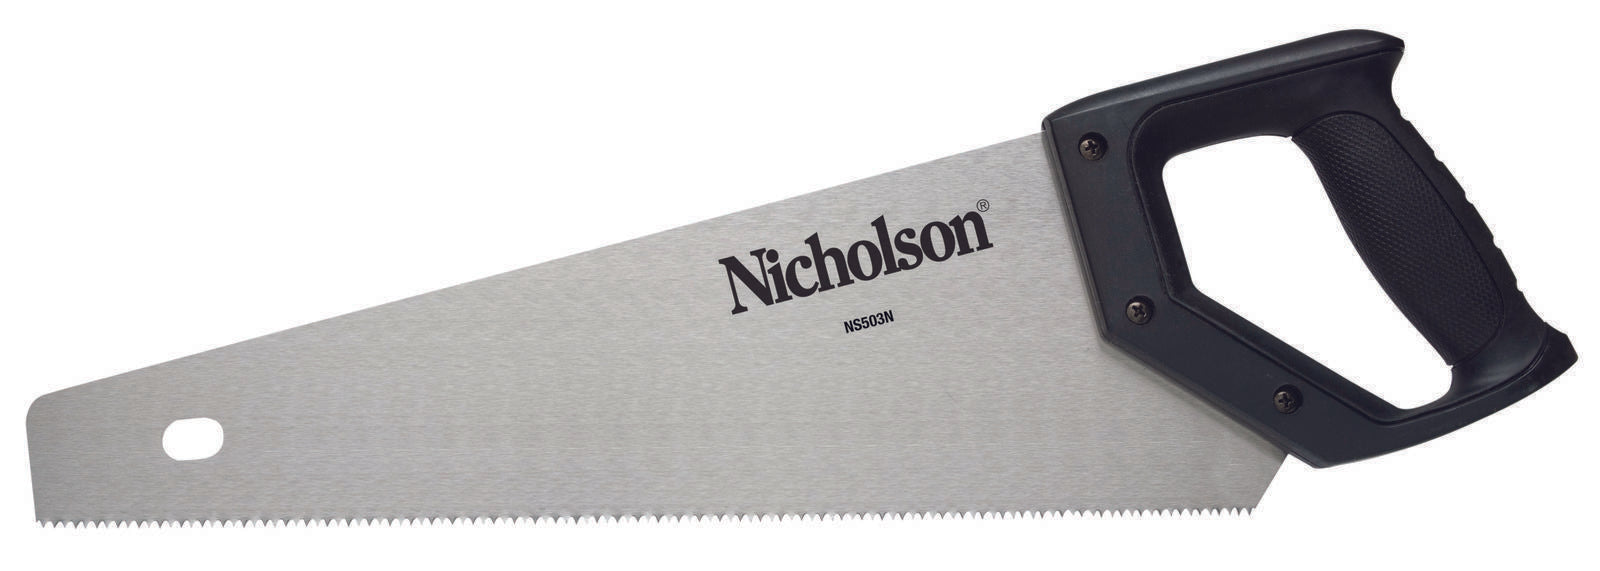 Nicholson NS503N No. 50 15" x 8 Point Quik-Cut Economy Handsaw